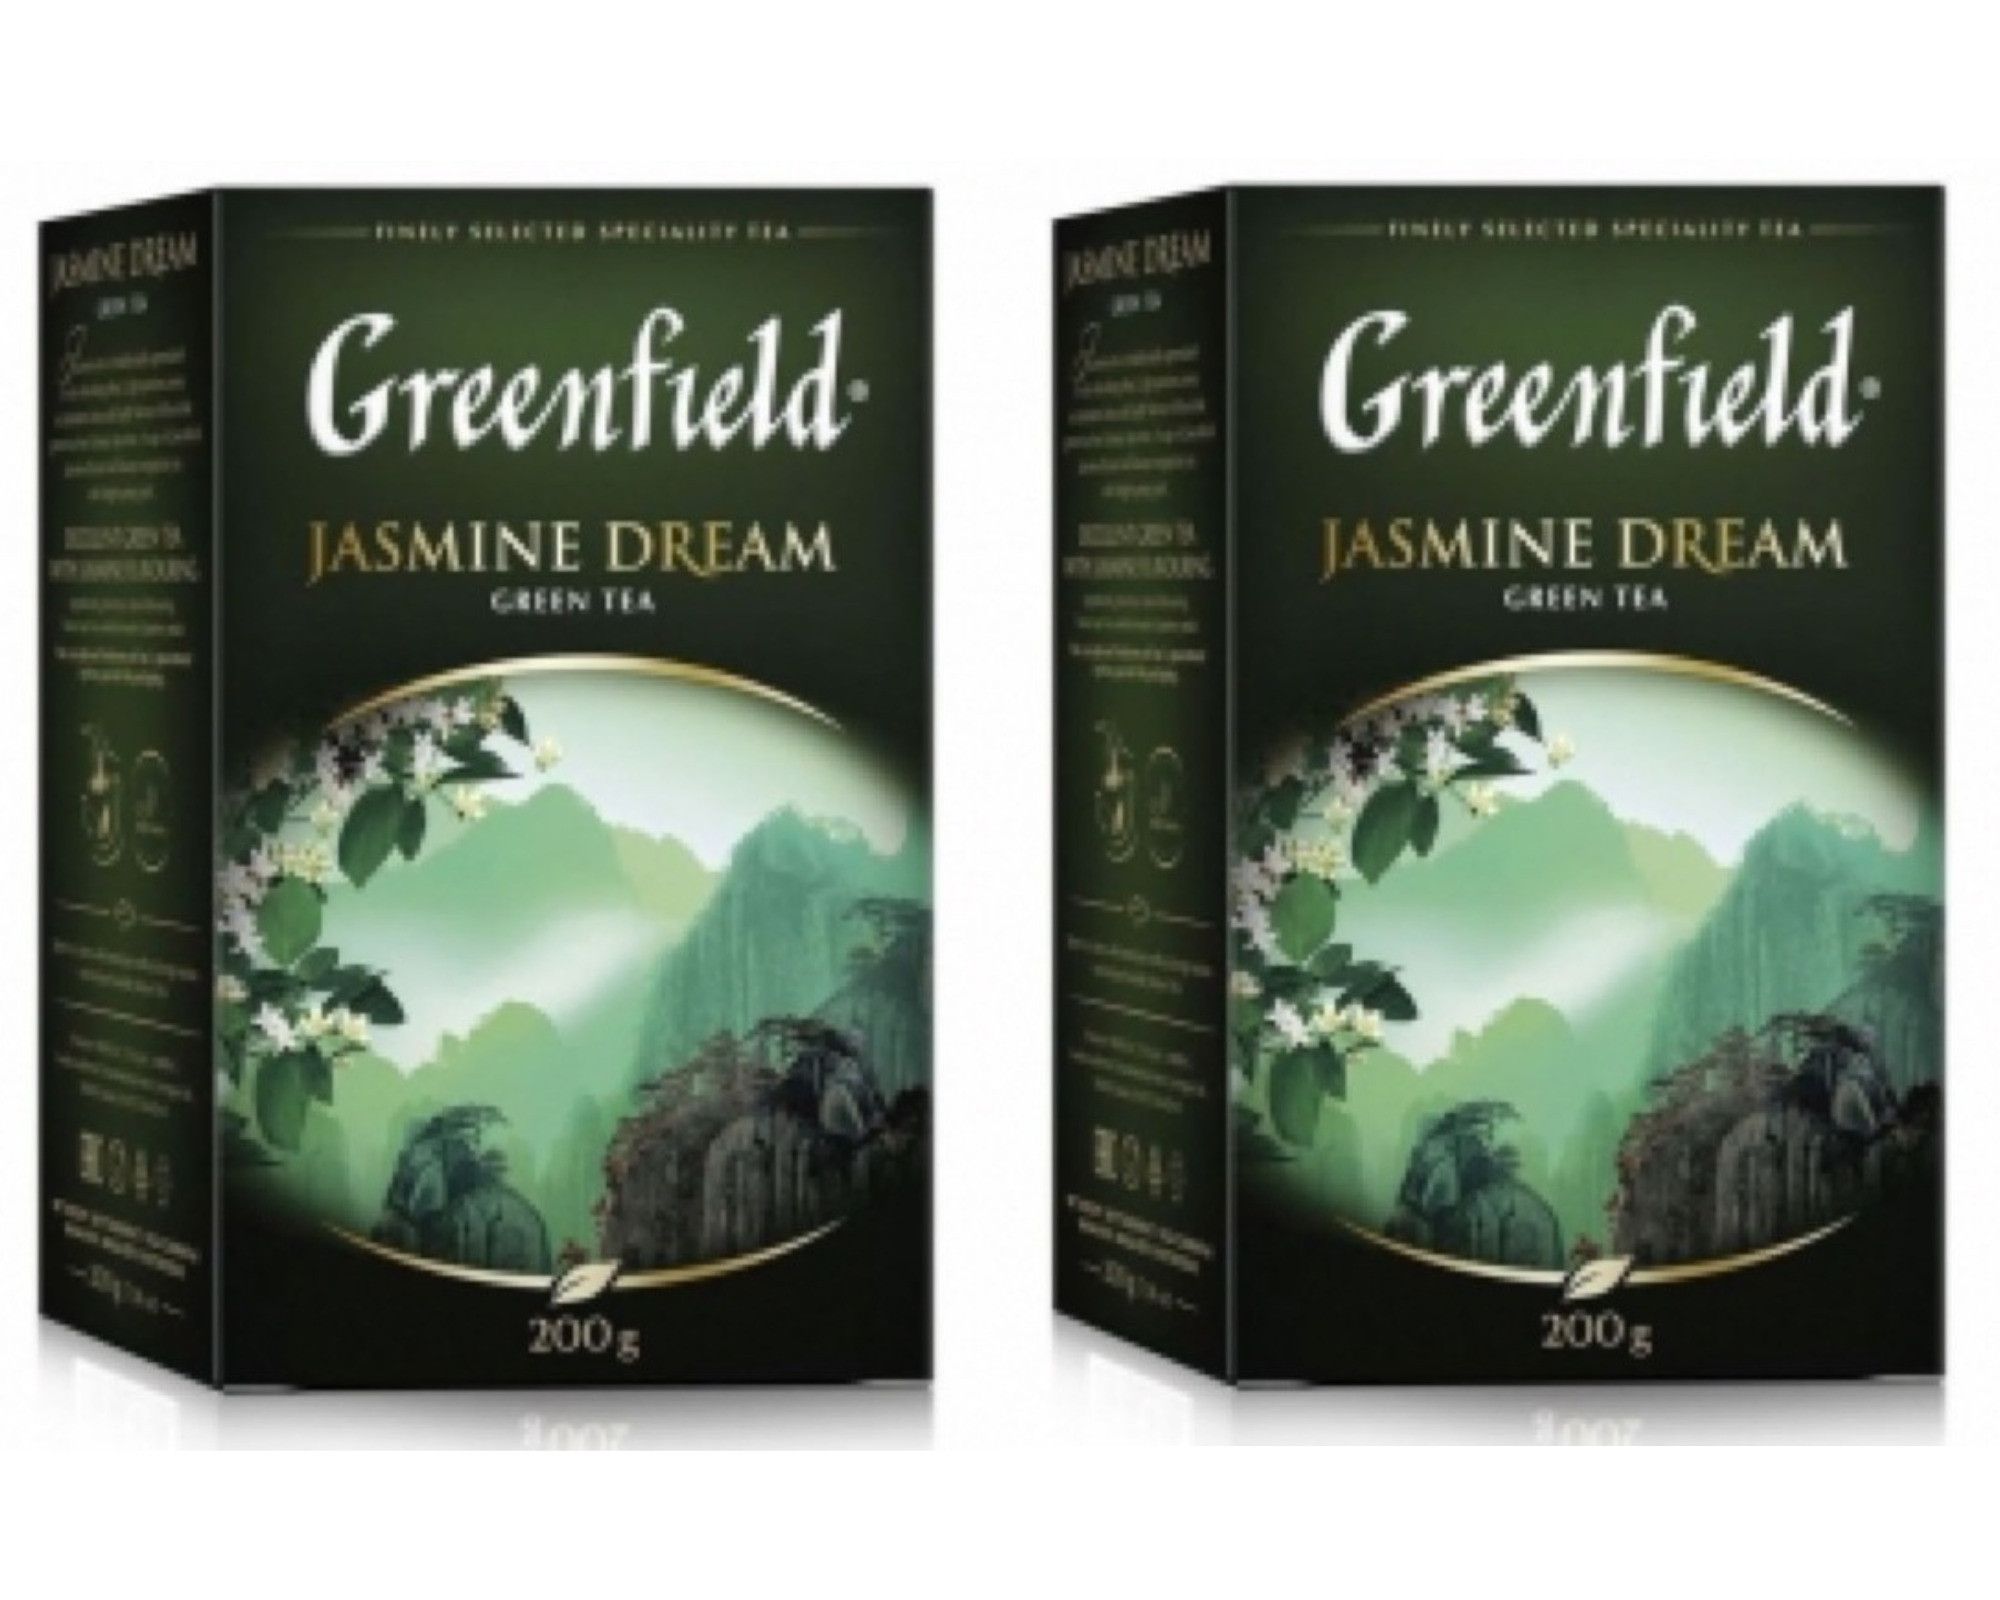 Dream 200. Greenfield Green Tea jasmin Dream 200гр. Greenfield Jasmine Dream 100 шт.